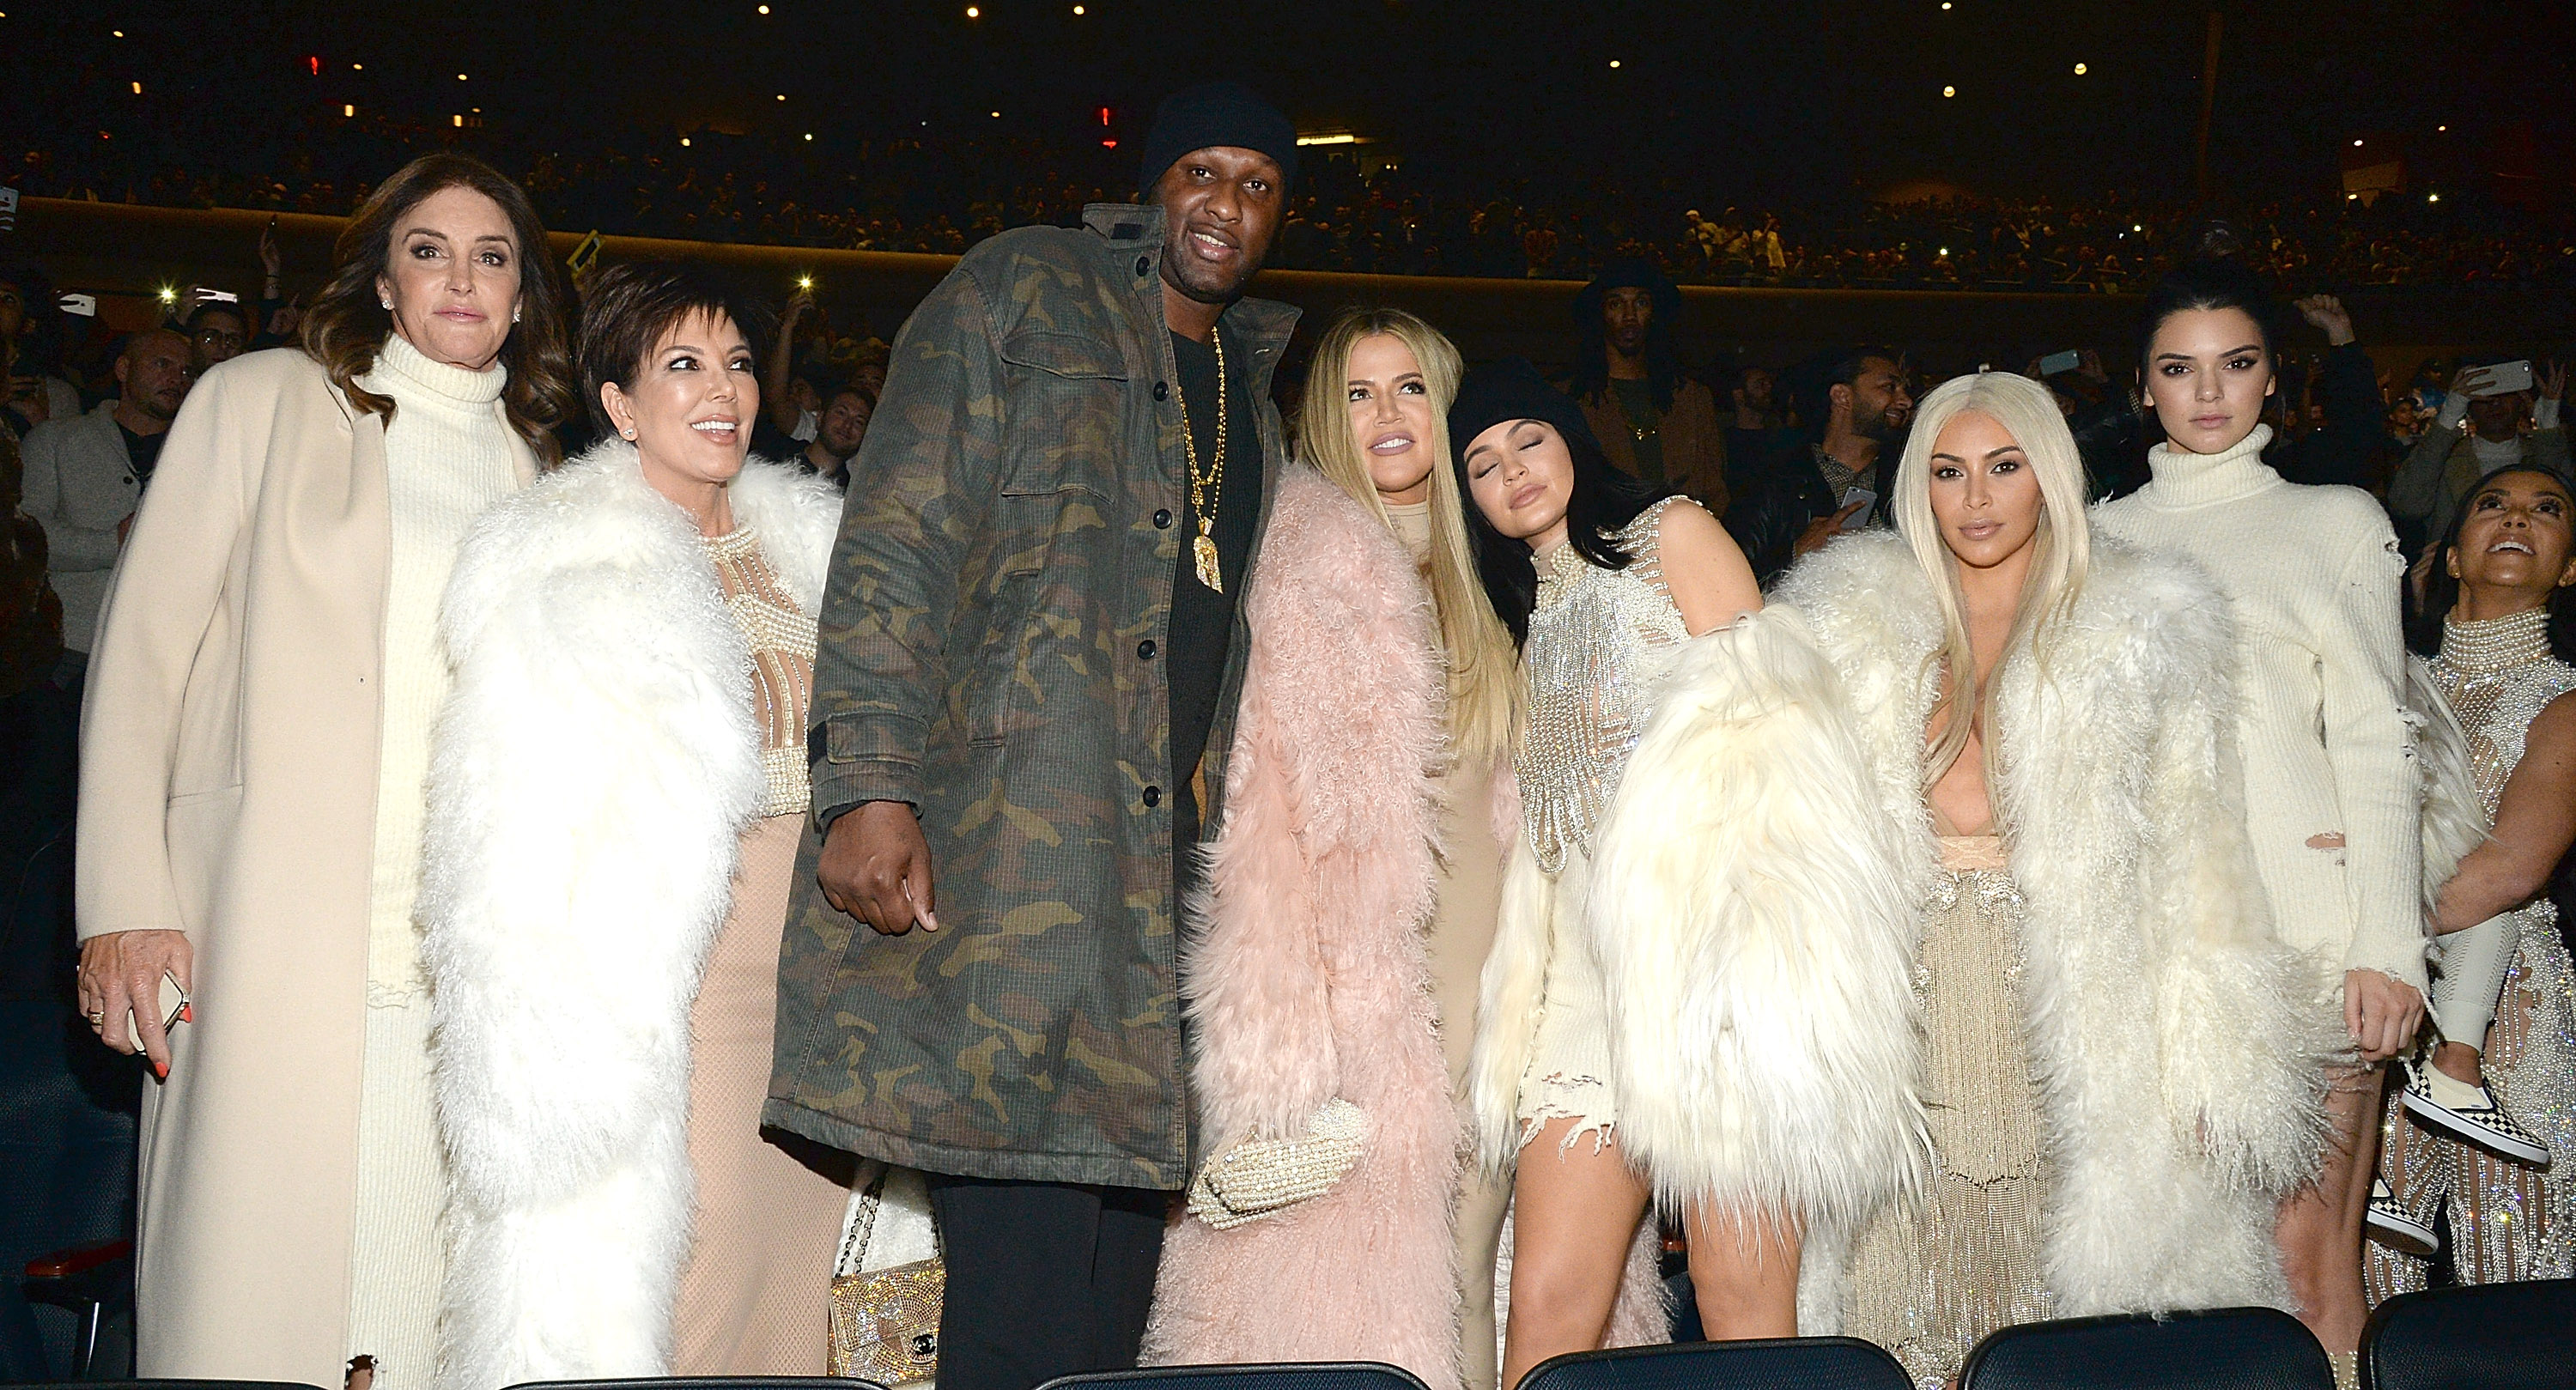 Caitlyn Jenner, Kris Jenner, Lamar Odom, Khloe Jenner, Kylie Jenner, Kim Kardashian West, Kendall Jenner, North West and Kourtney Kardashian attend Kanye West Yeezy Season 3 at Madison Square Garden on February 11, 2016 in New York City.